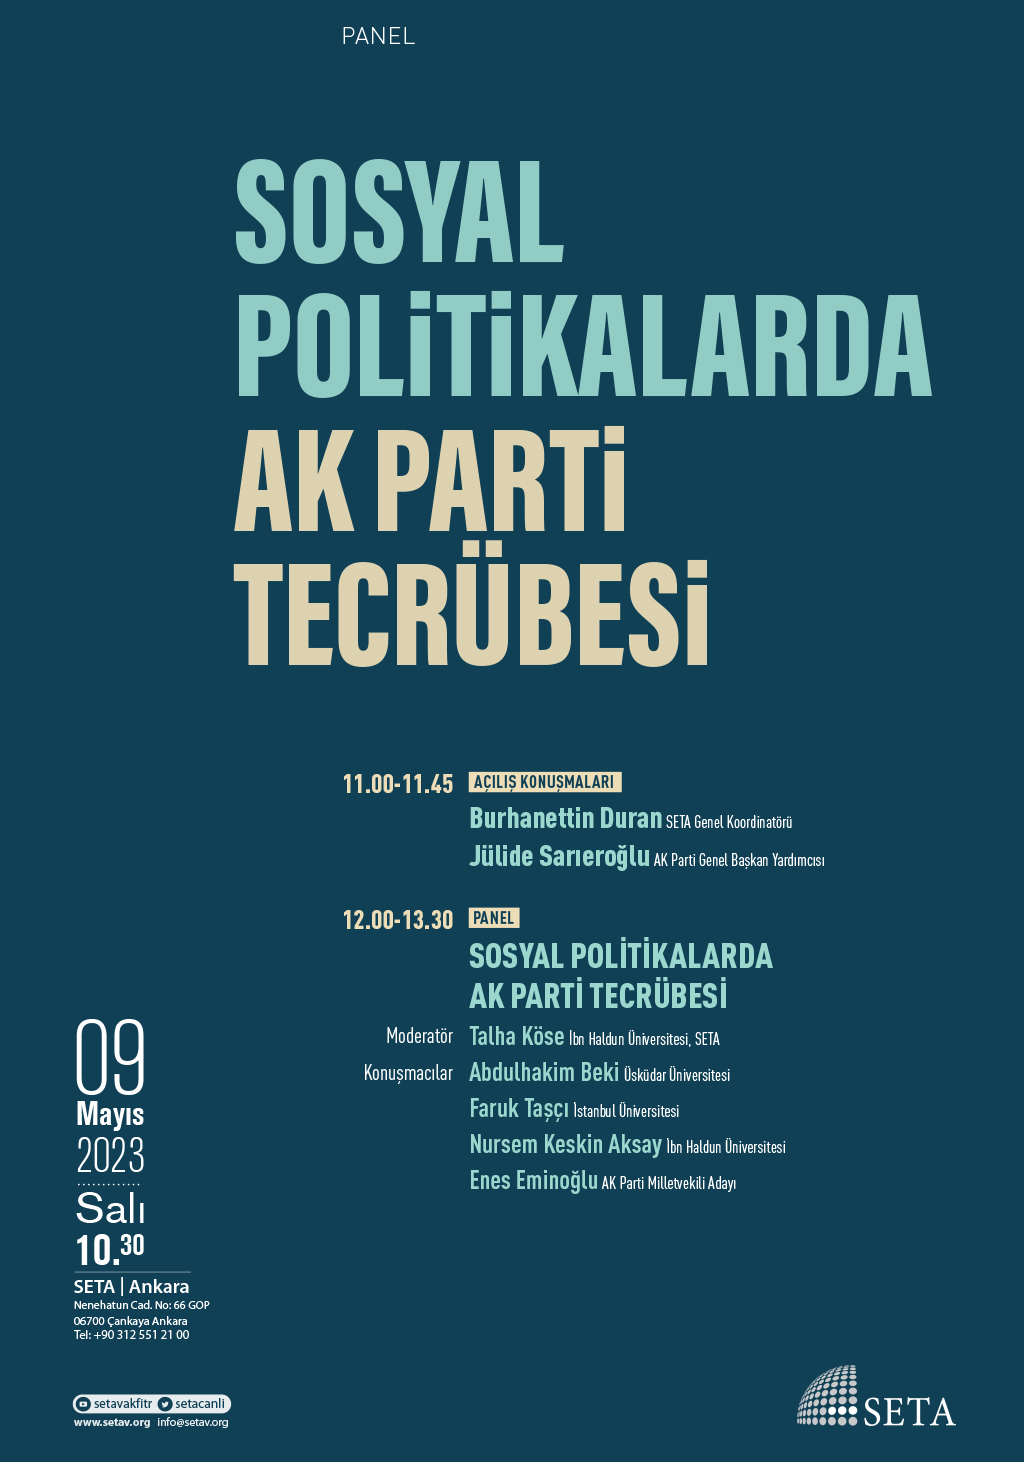 Panel: Sosyal Politikalarda AK Parti Tecrübesi